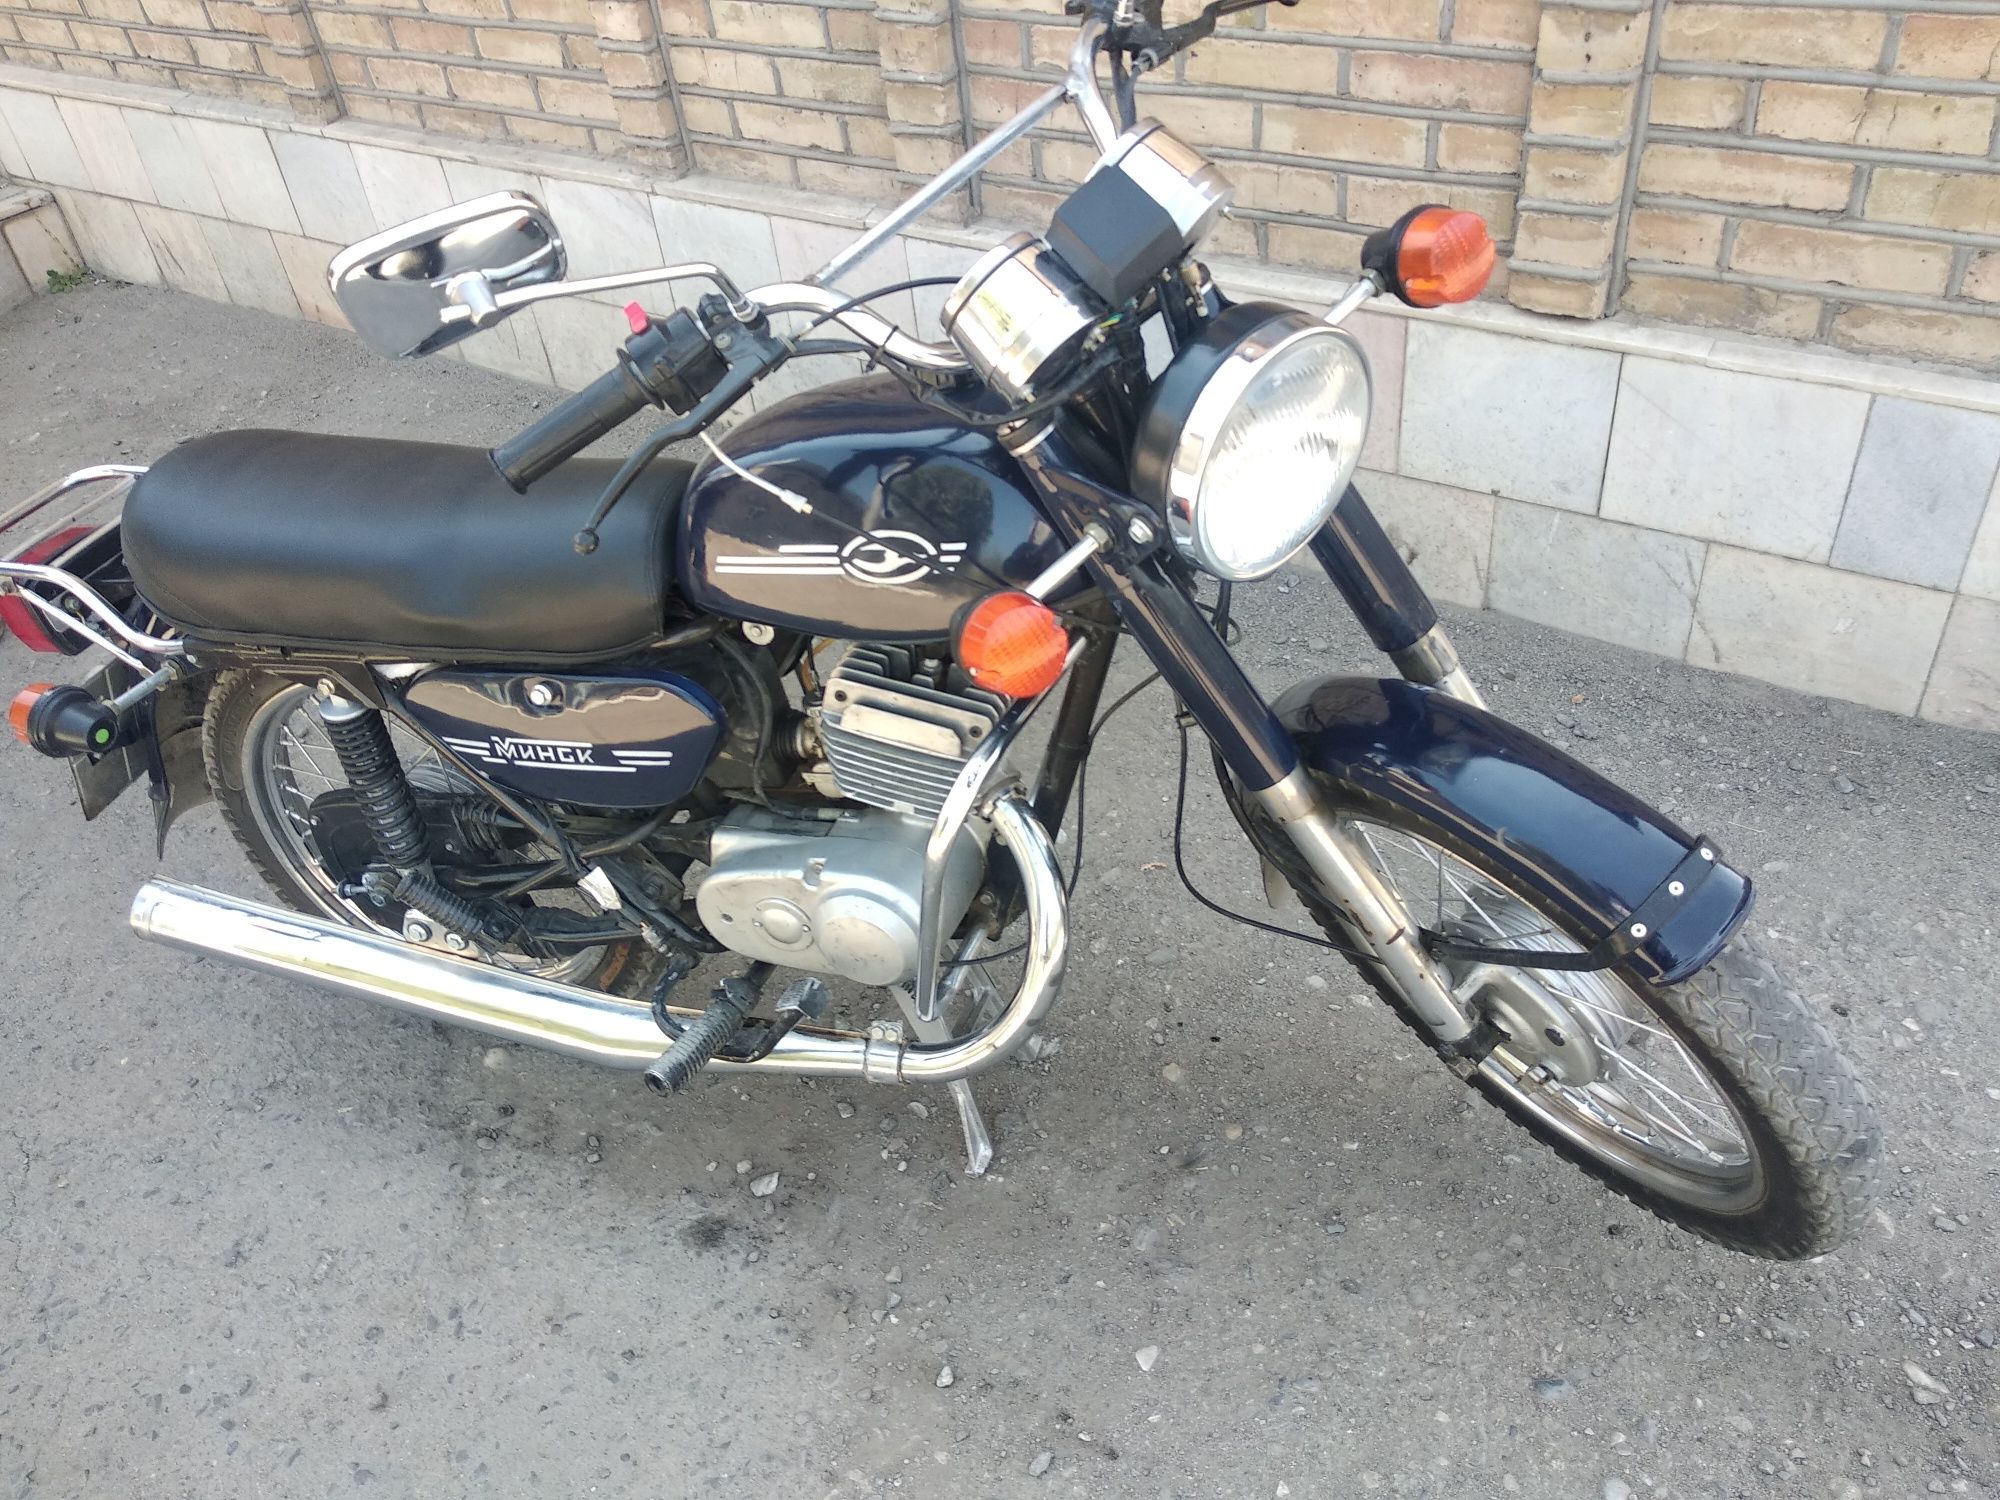 Минск мотоцикл 1991 года